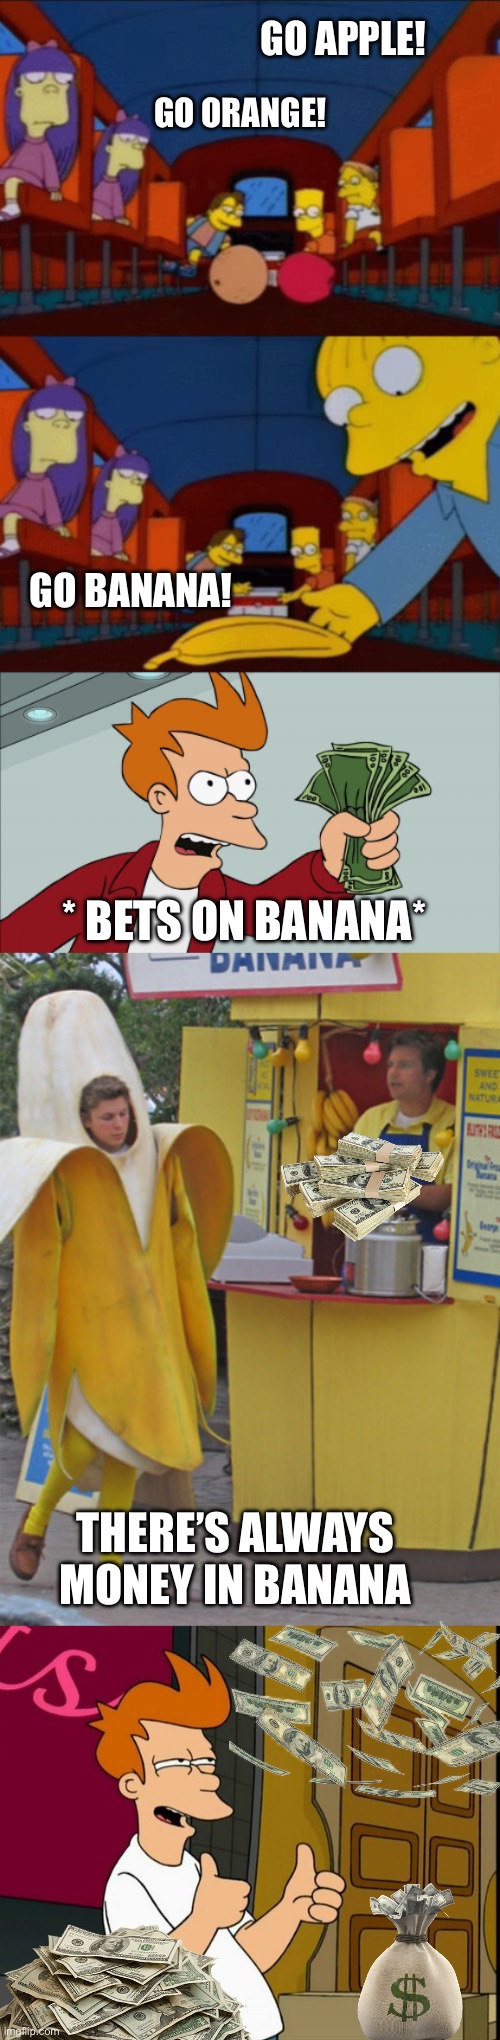 Fry Bets On Banana | GO APPLE! GO ORANGE! GO BANANA! * BETS ON BANANA*; THERE’S ALWAYS MONEY IN BANANA | image tagged in go apple go orange go banana simpsons,shut up and take my money fry,the simpsons,futurama,arrested development,banana | made w/ Imgflip meme maker